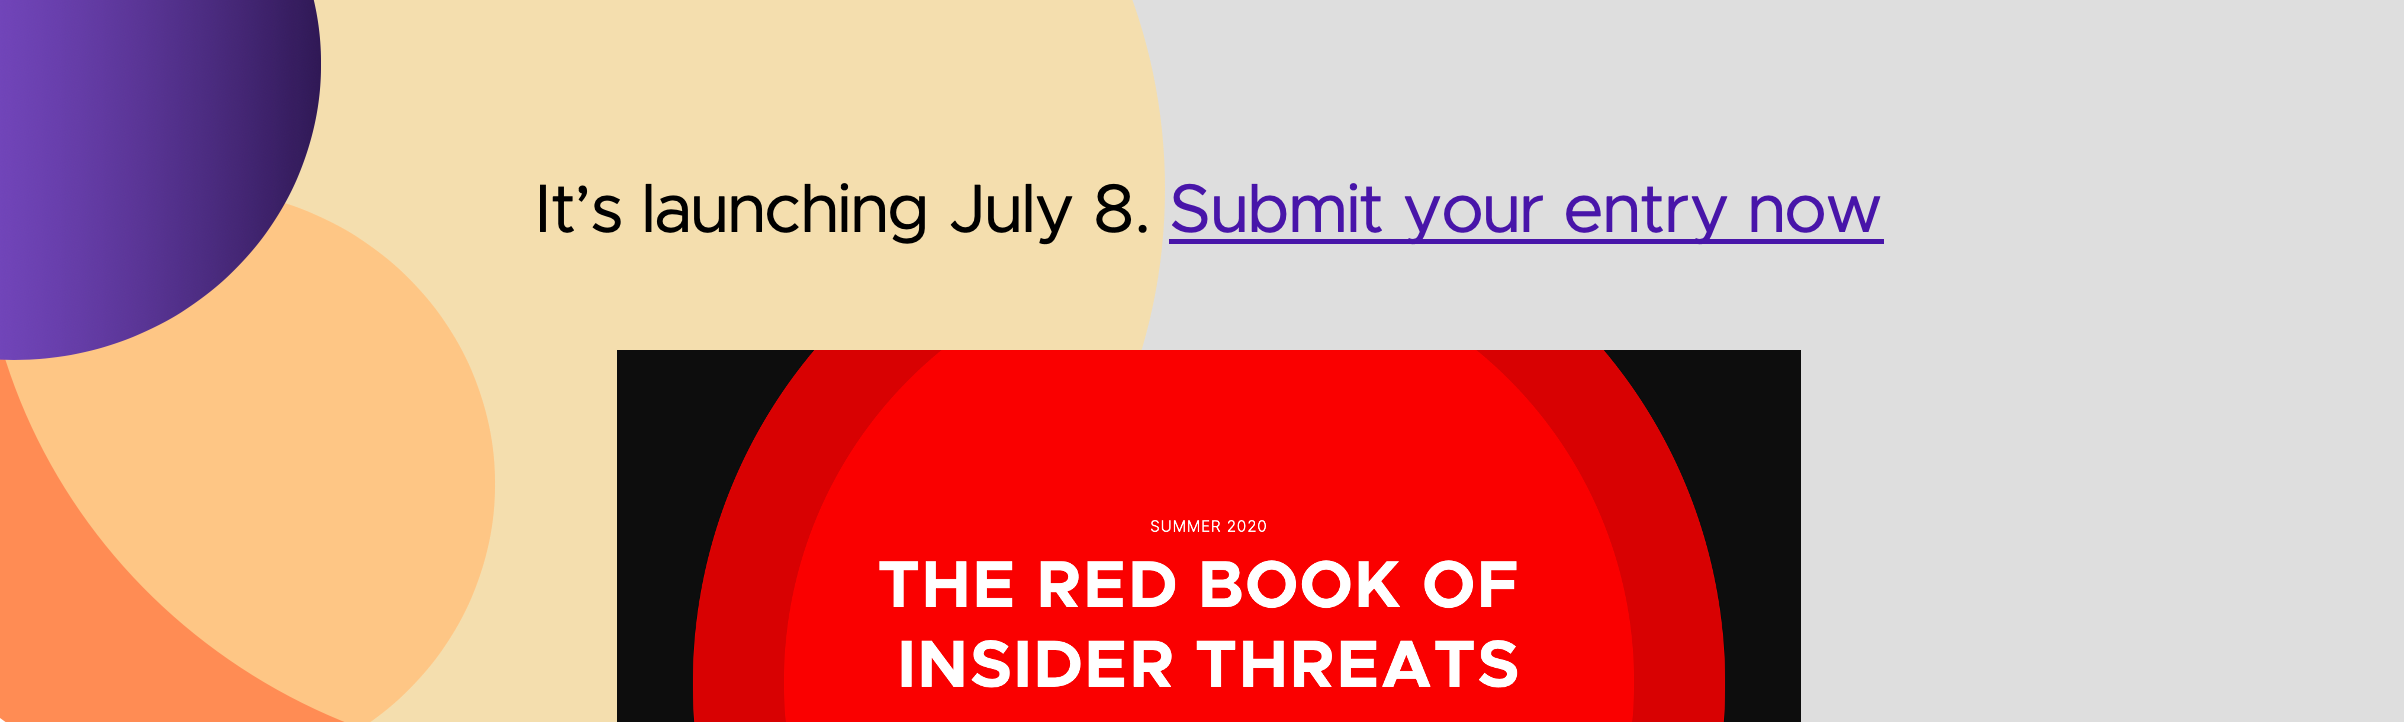 dasera-red-book-insider-threats-submit-entry